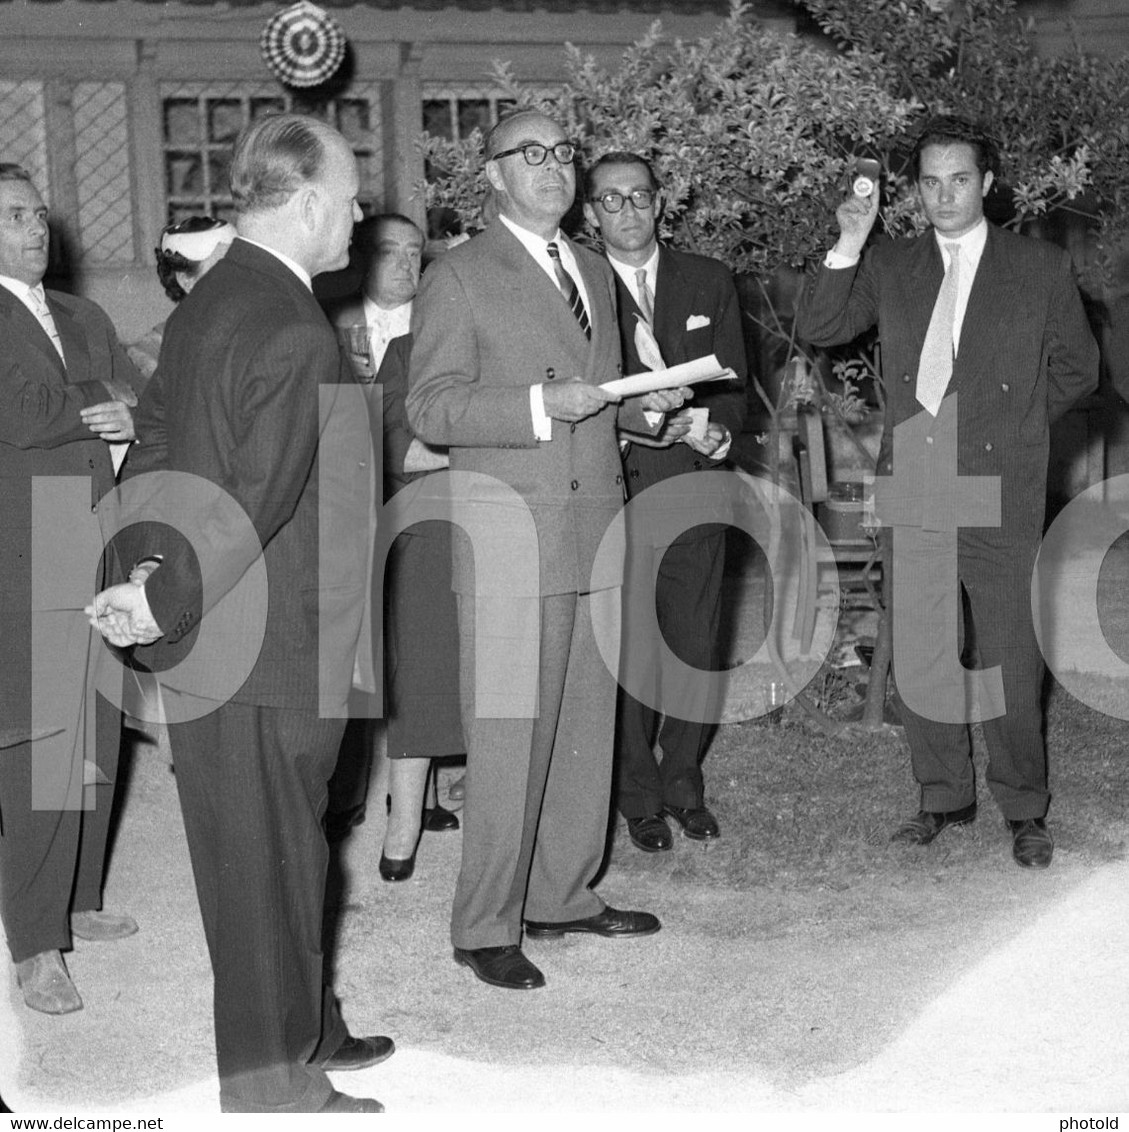 DEUTSCHE LUFTHANSA PARTY  OCTOBER 1957 LISBON PORTUGAL SET ORIGINAL 60mm NEGATIVE NOT PHOTO FOTO PLANE LCAS196